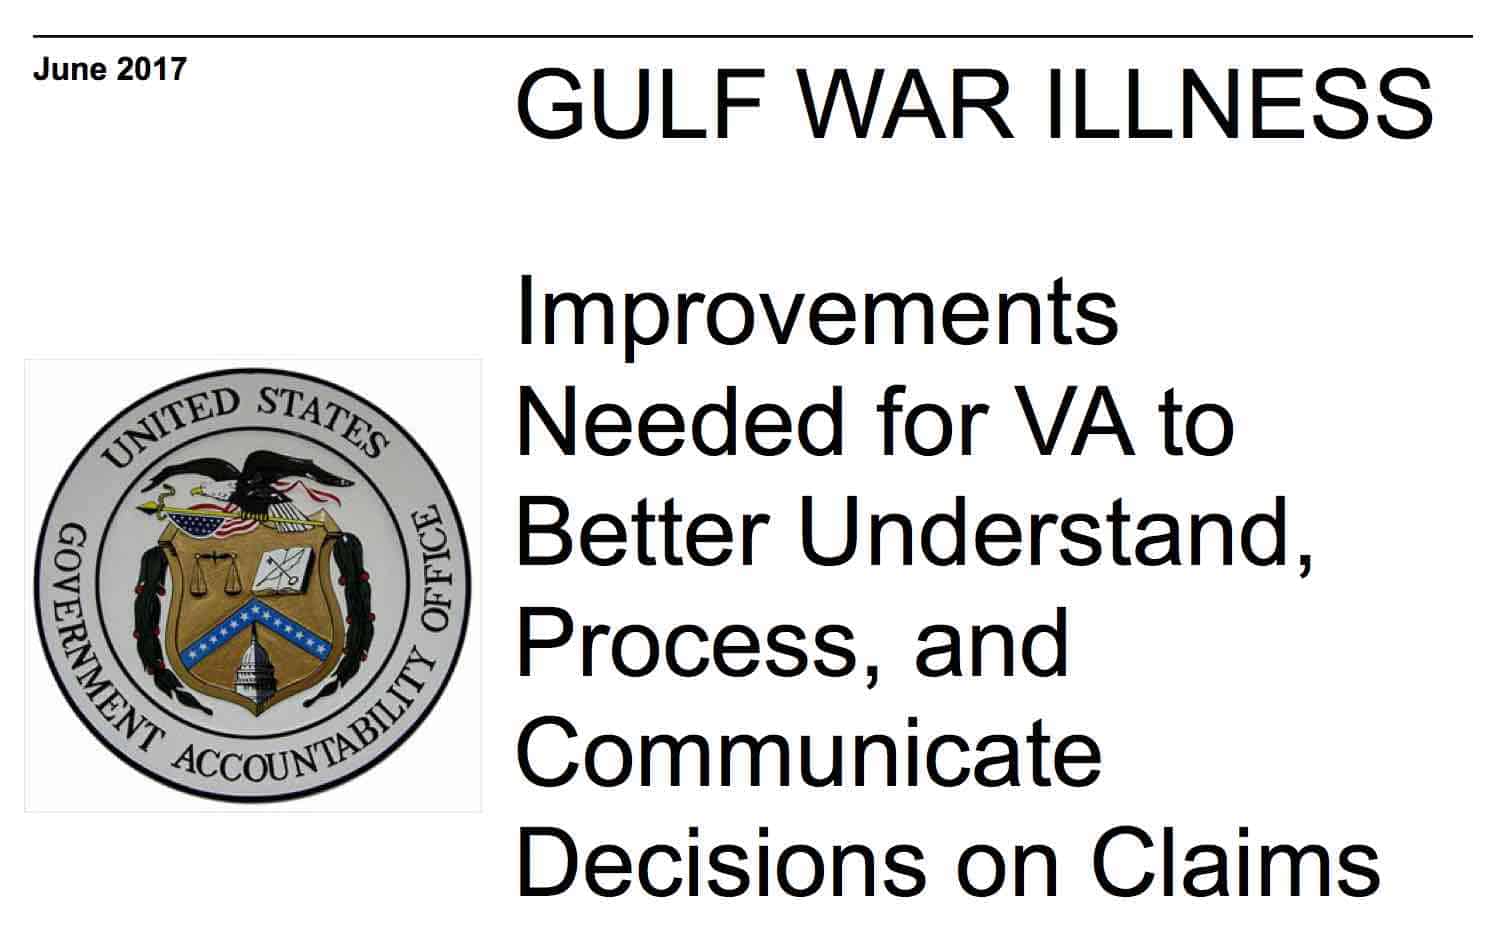 Gulf War Illness GAO Report